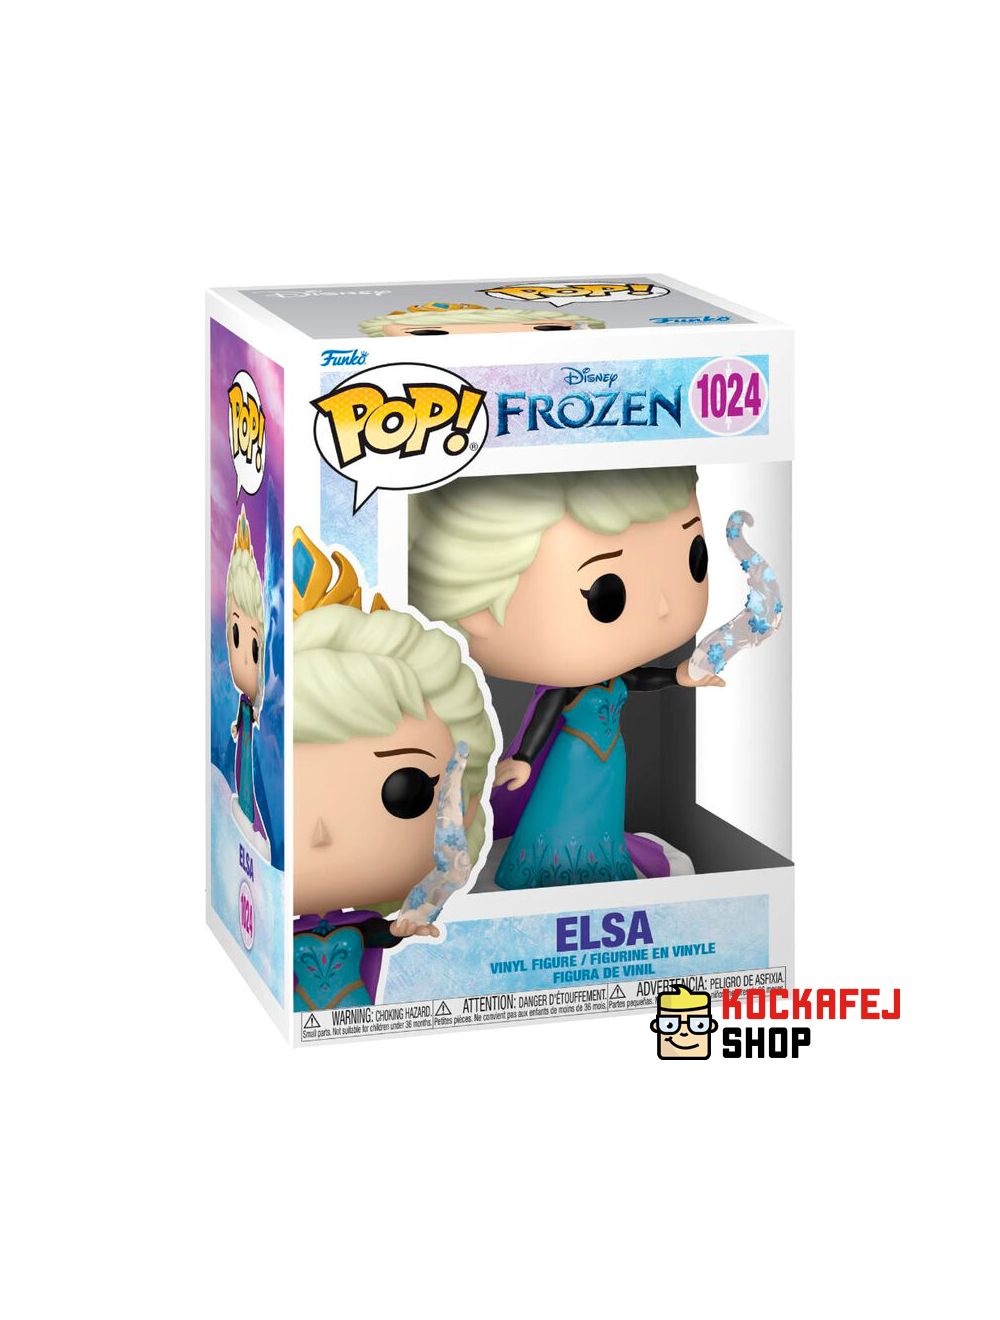 Funko POP! Frozen Ultimate Princess Elsa Jégvarázs 10cm vinyl figura